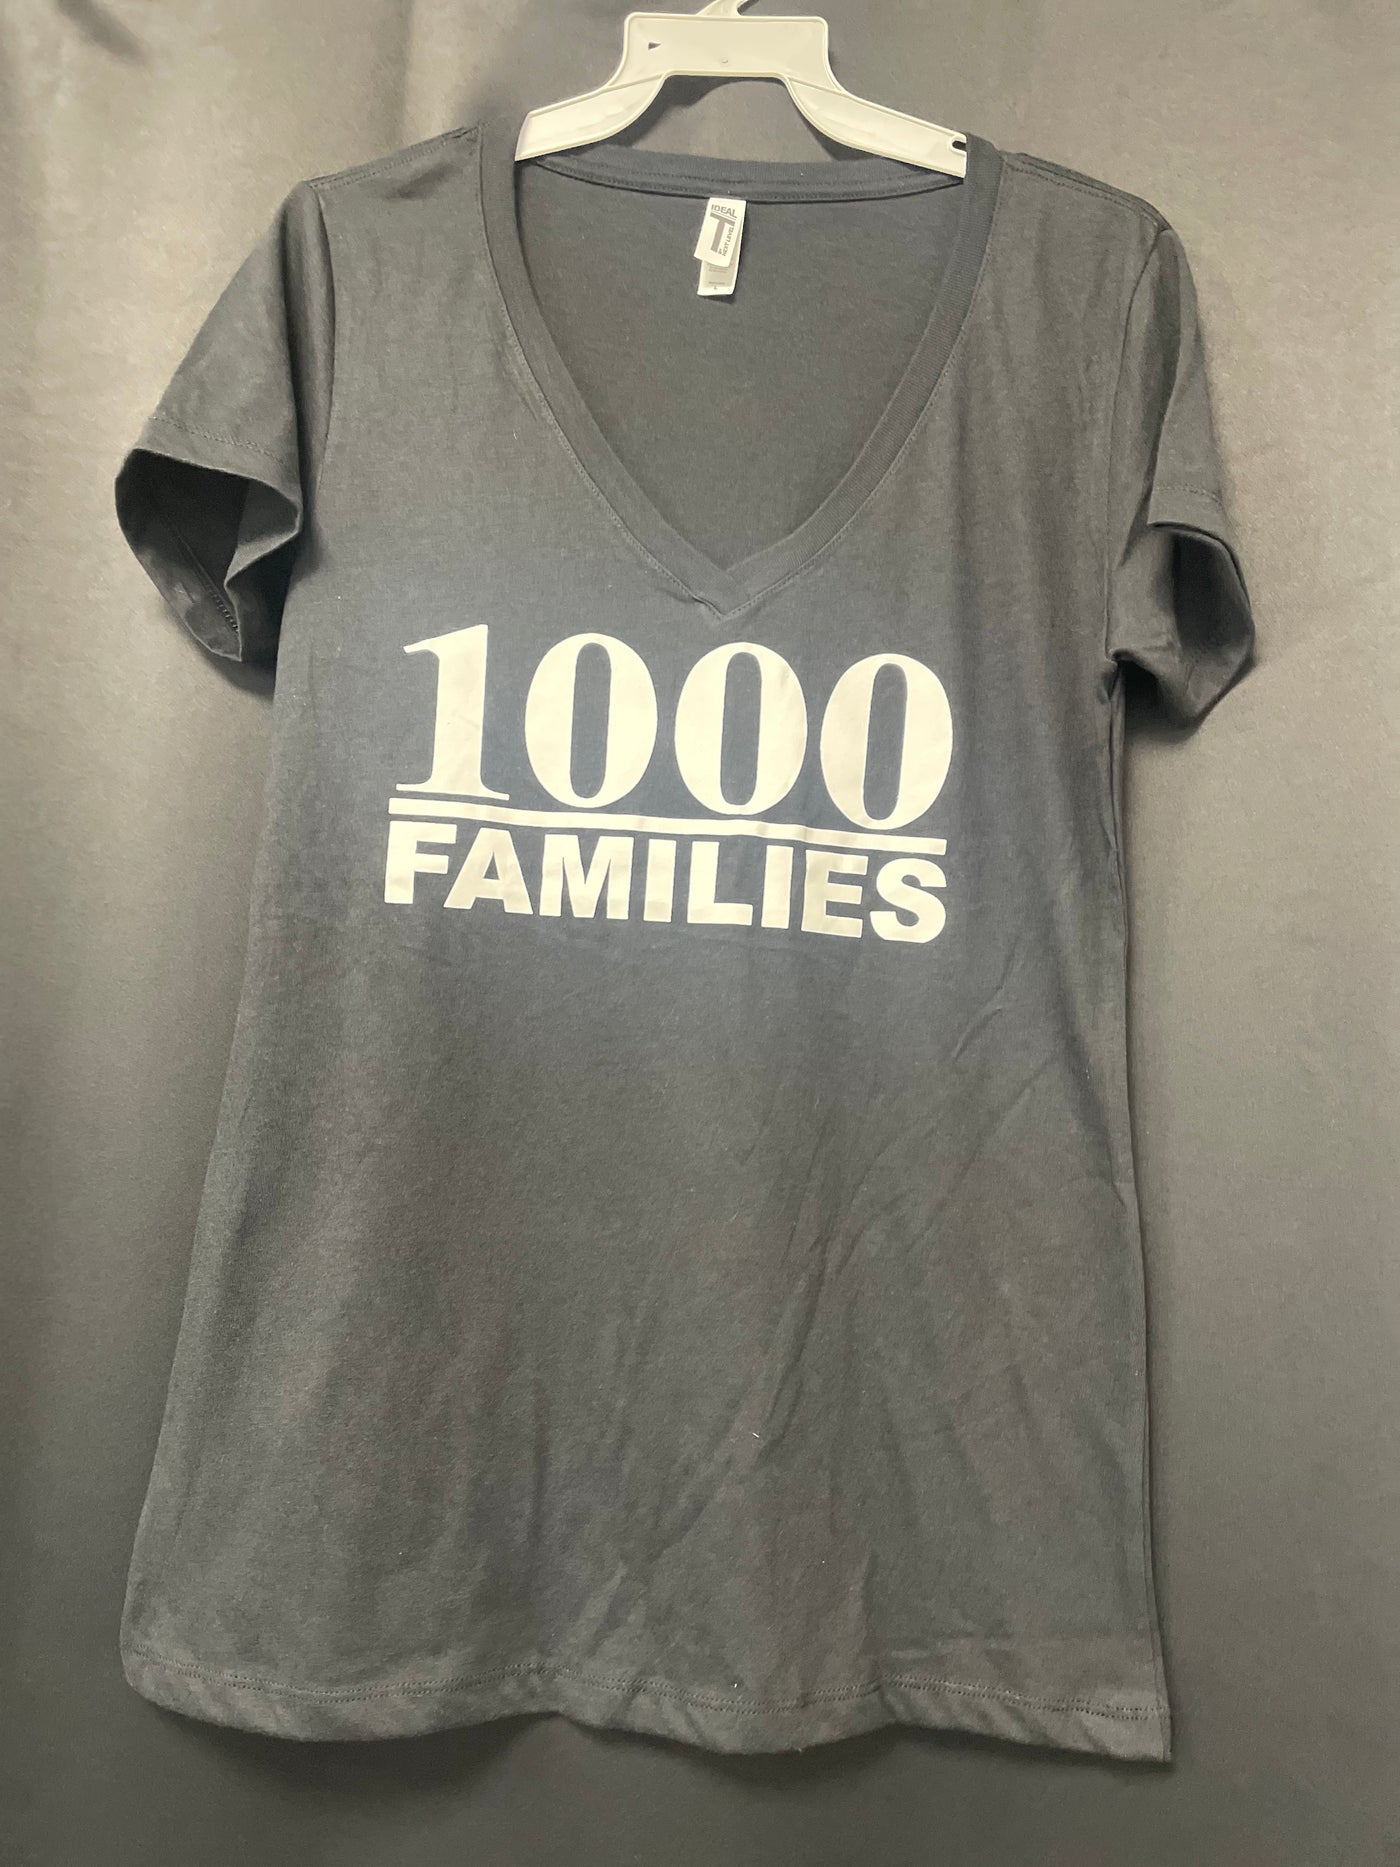 1000 families T-shirt vinyl